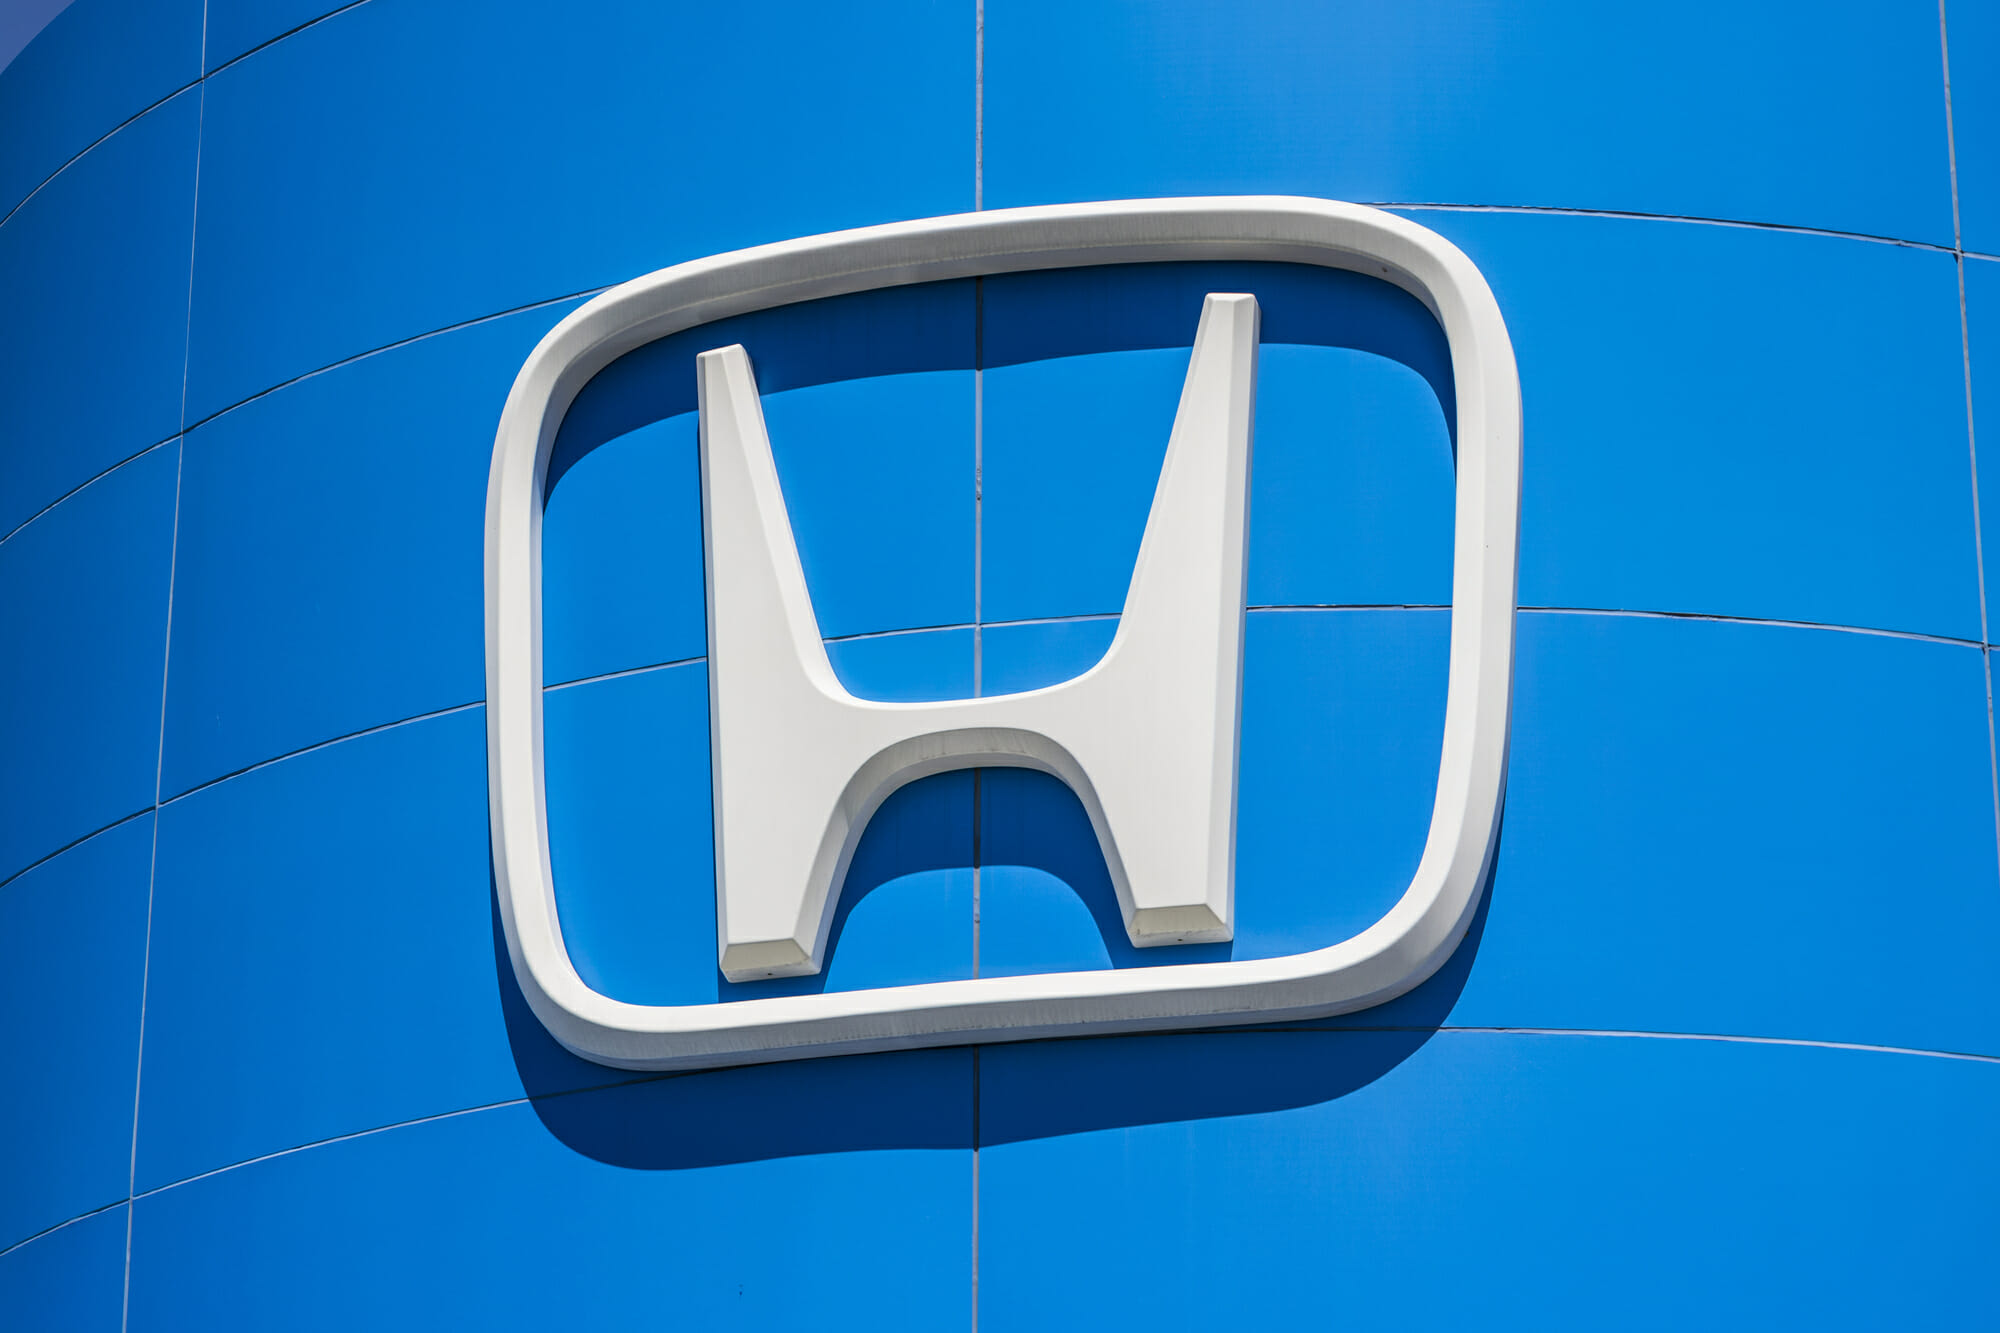 Honda CVT Transmission Recalls